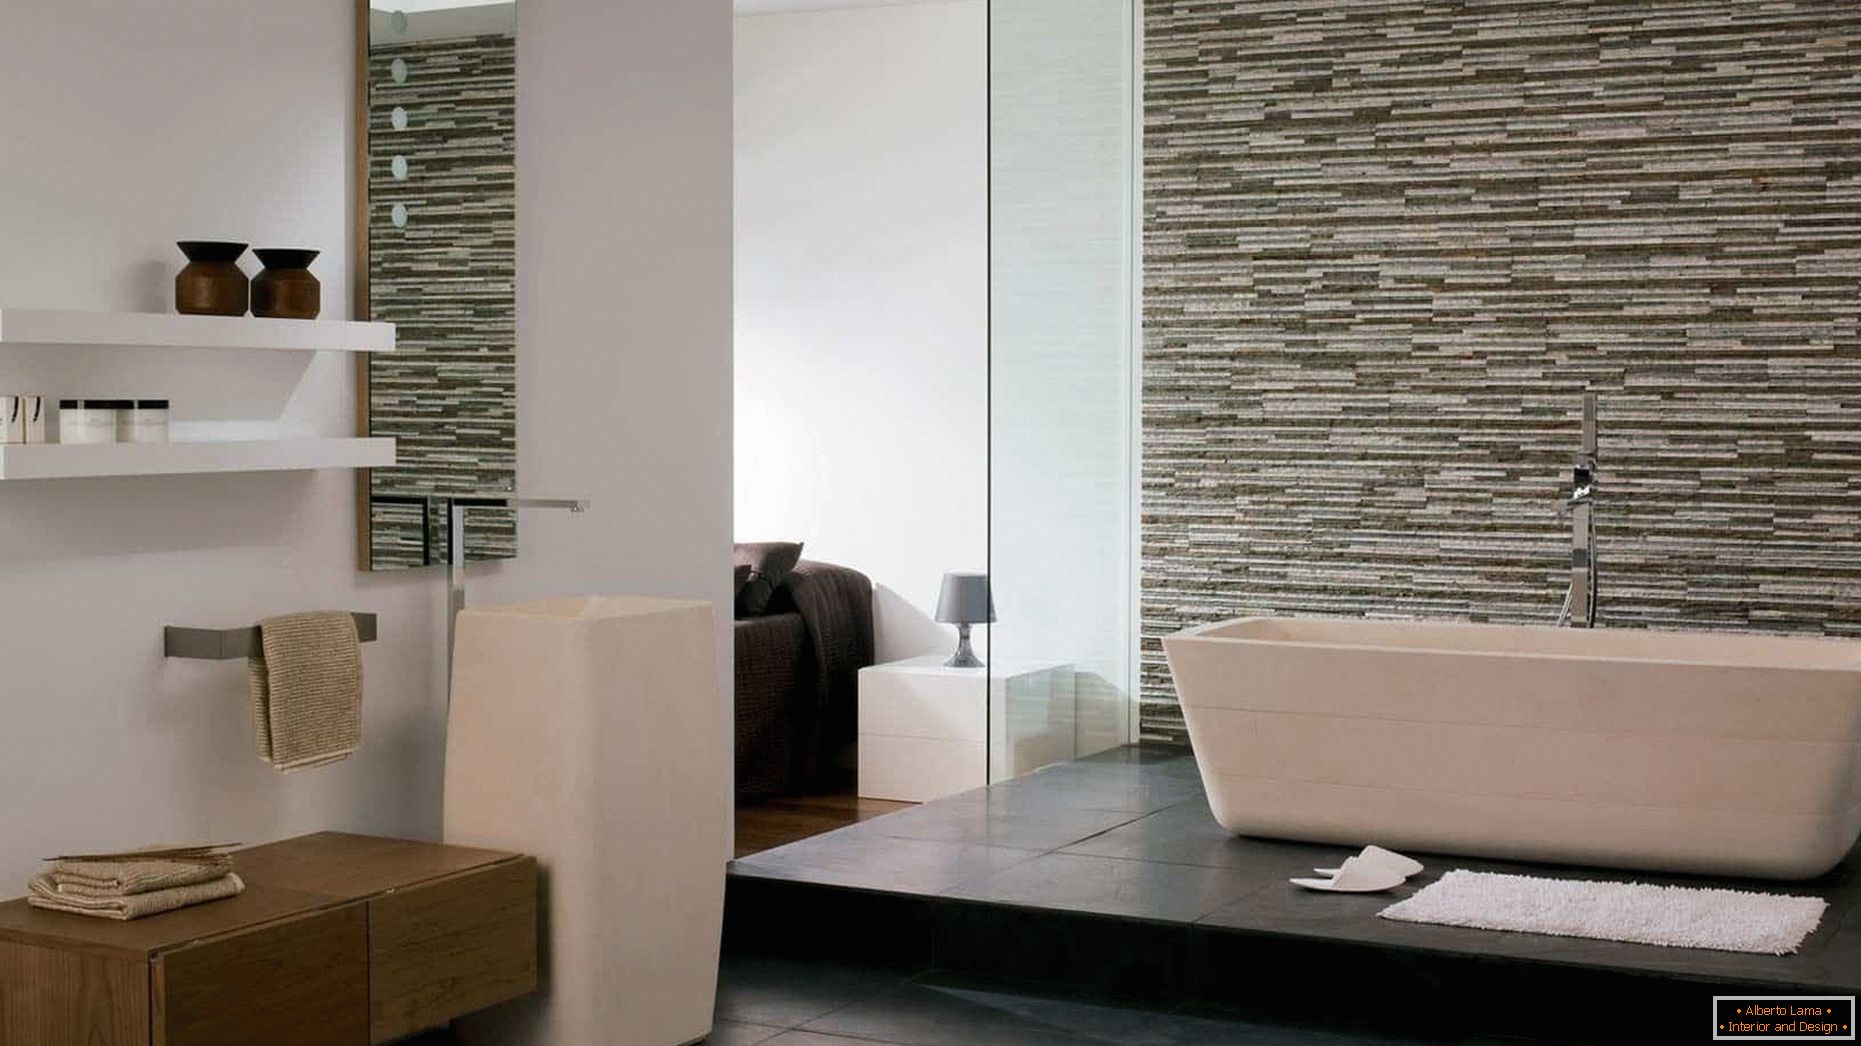 Salle de bain avec un mur de pierre